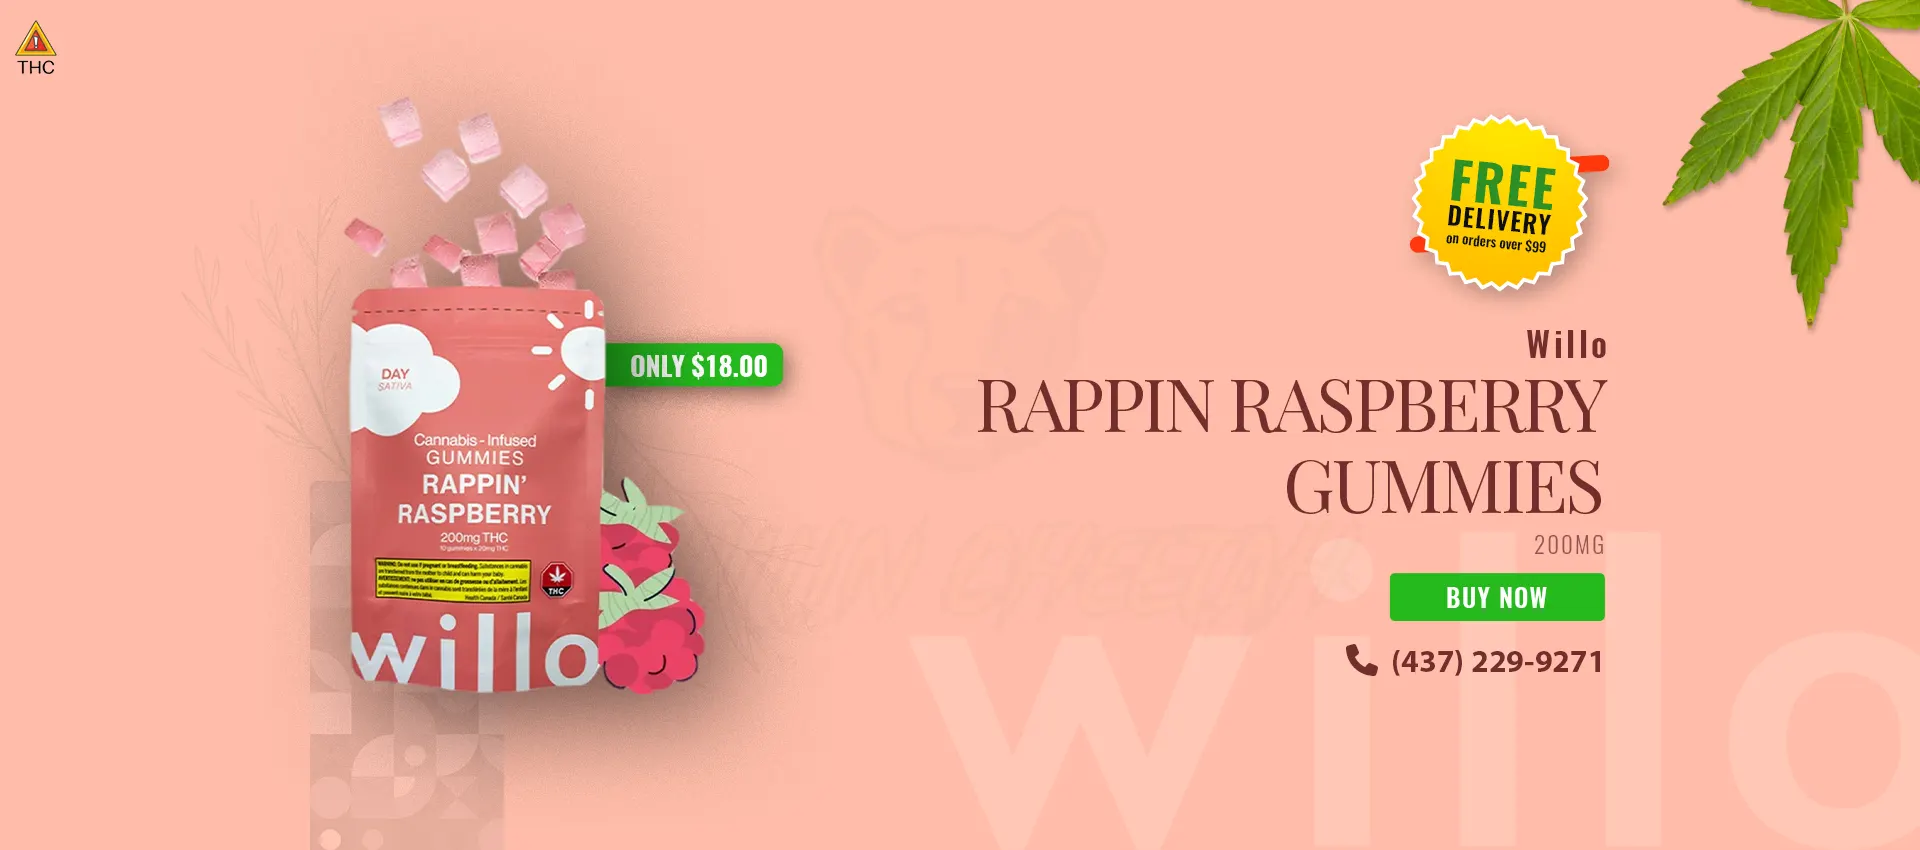 Willo Rappin Raspberry 200mg Gummies